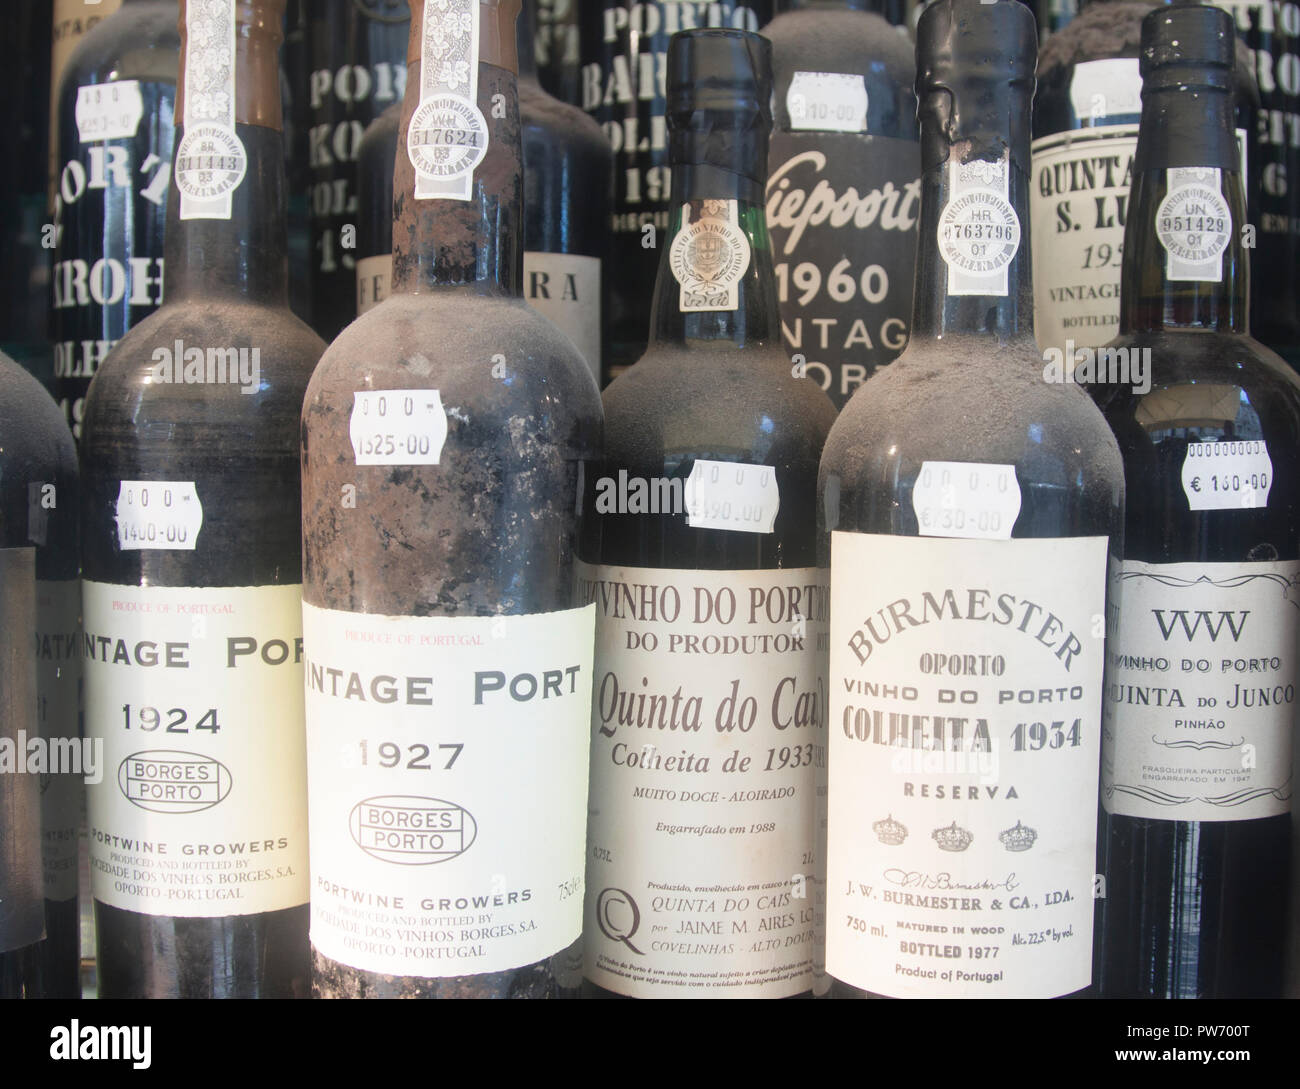 Bottles of vintage port for sale in a shop window in Lisbon, Portugal Stock Photo